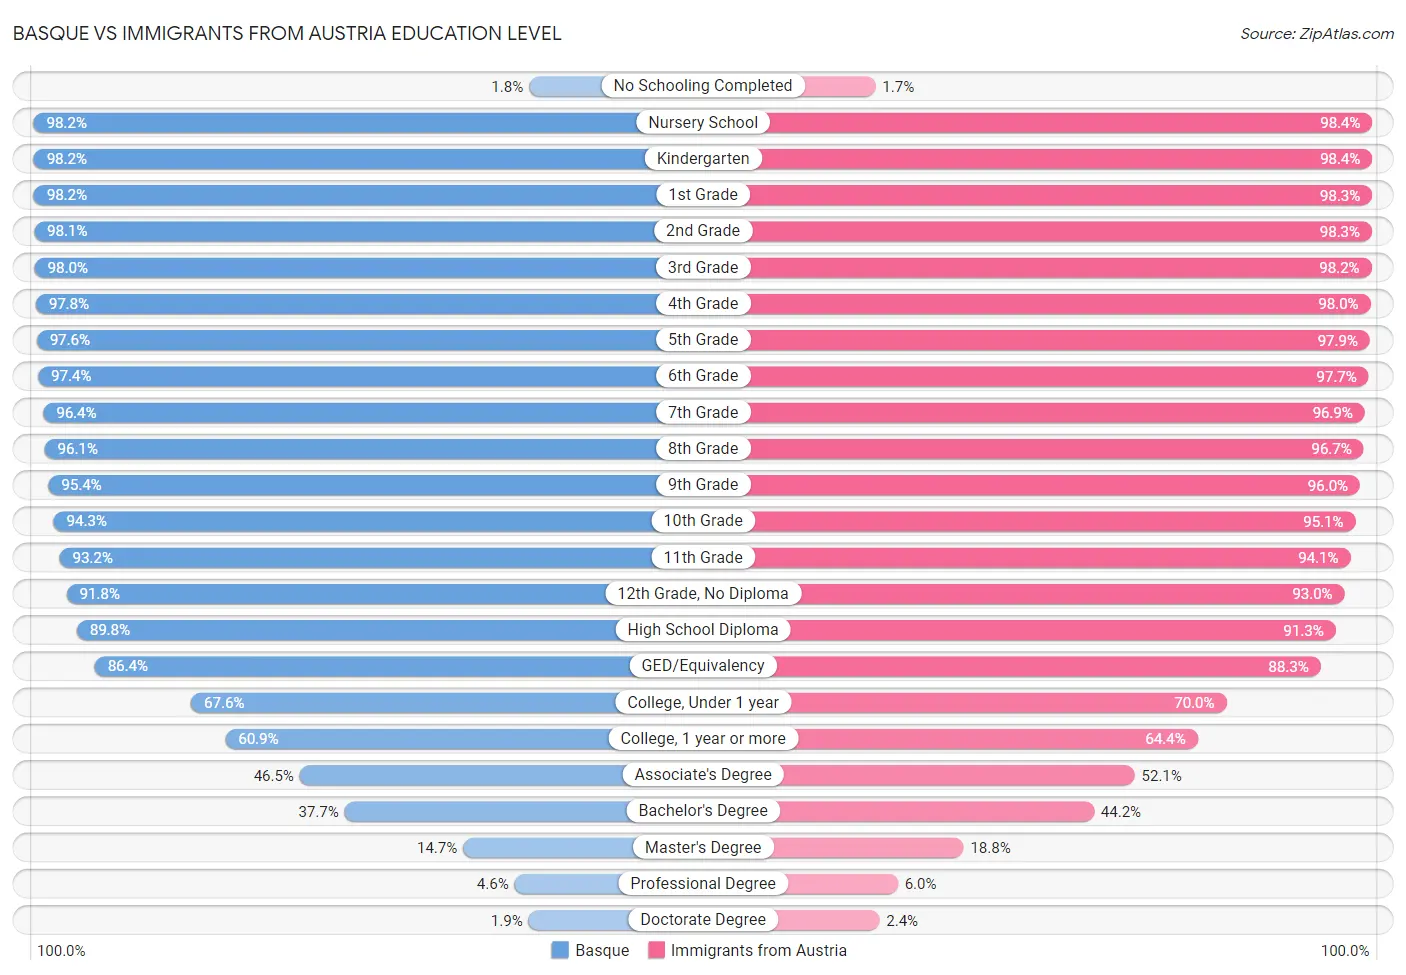 Basque vs Immigrants from Austria Education Level